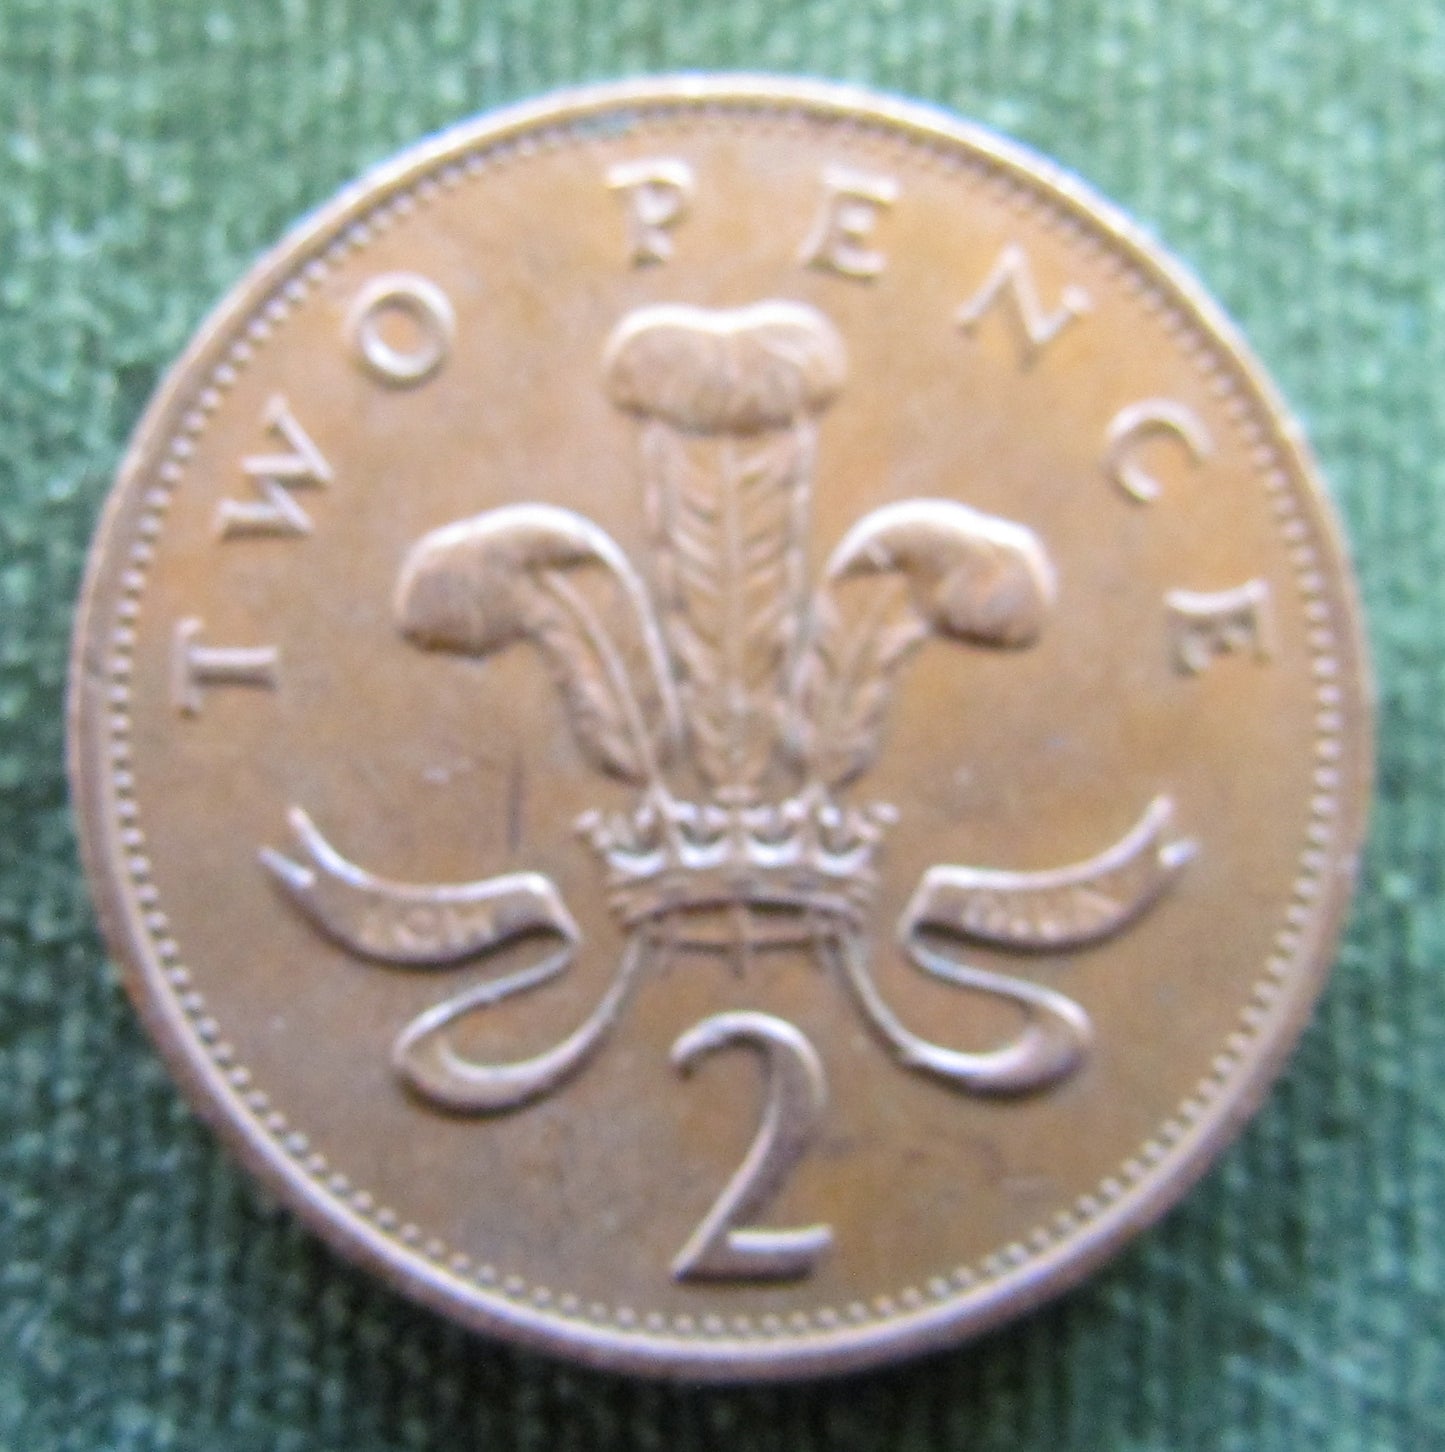 GB British UK English 1988 2 New Pence Queen Elizabeth II Coin